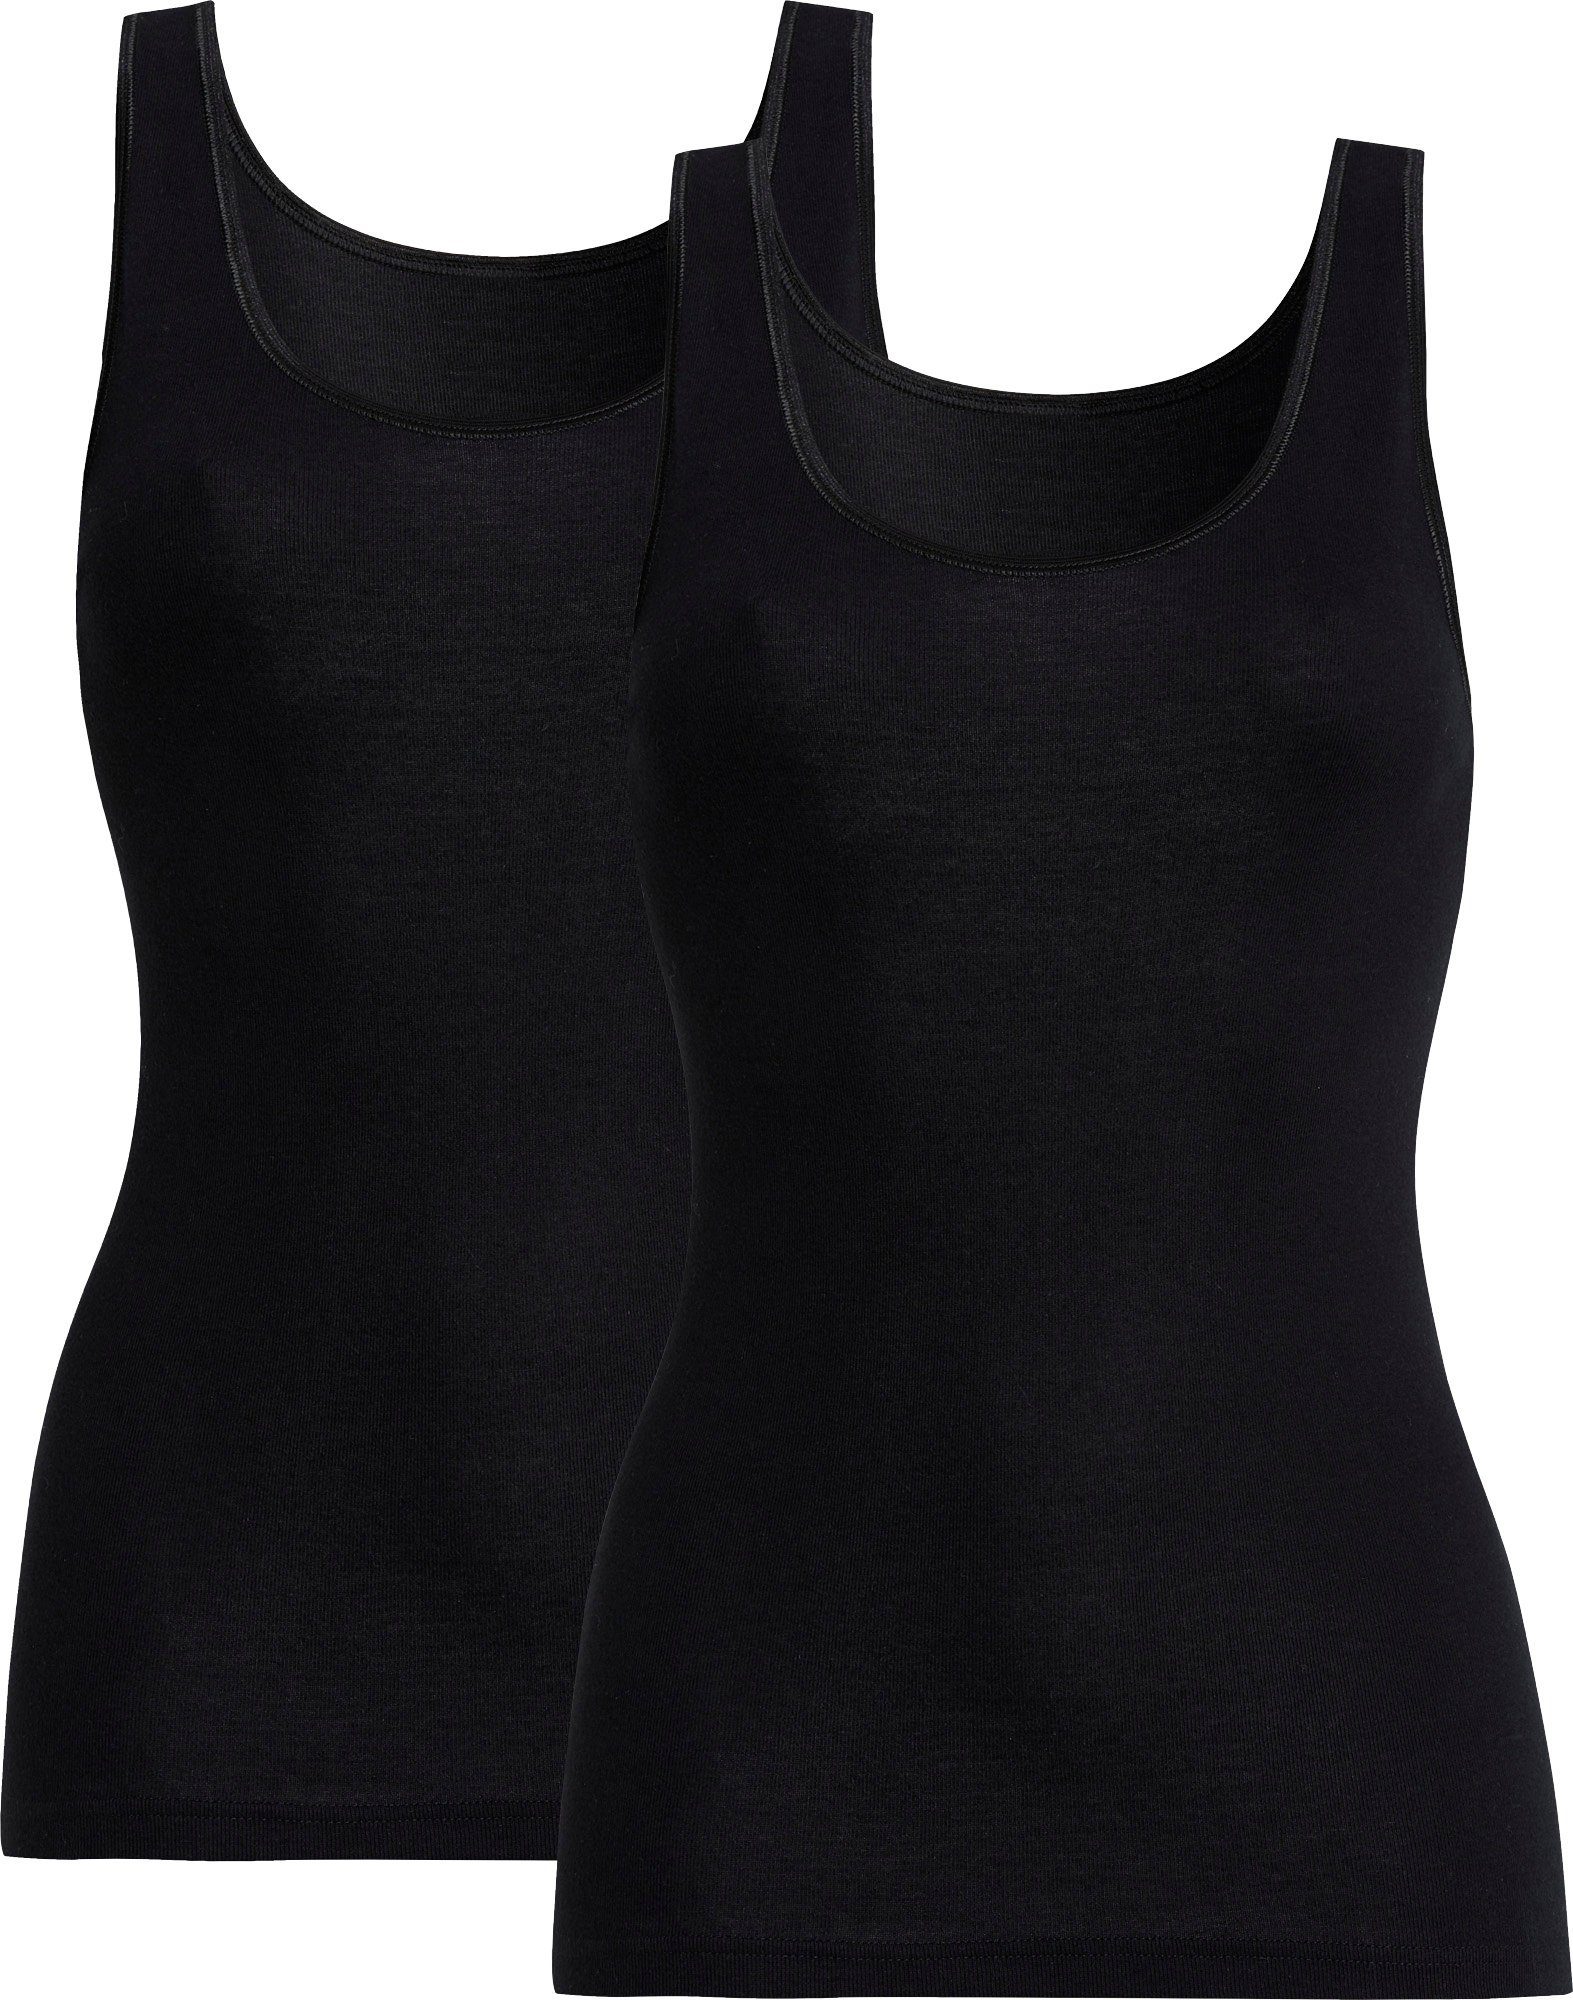 Unterhemd Damen-Unterhemd 2er-Pack schwarz conta Uni Feinripp